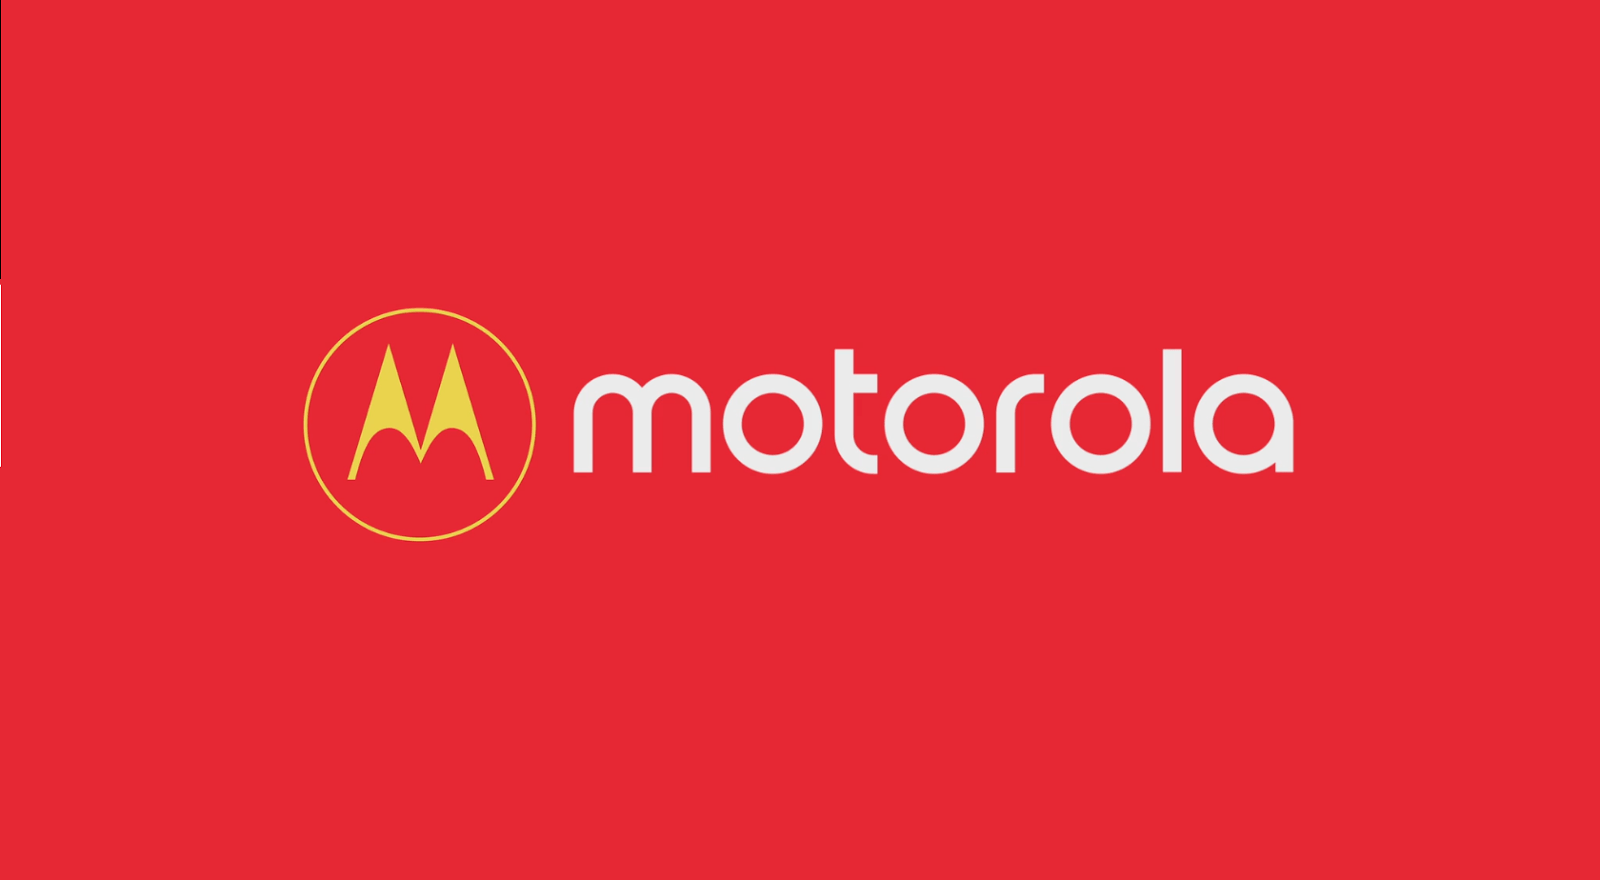 Old Motorola Logo - January 8, 2016 - The saddest day for Motorola Fans - Motorola Lovers